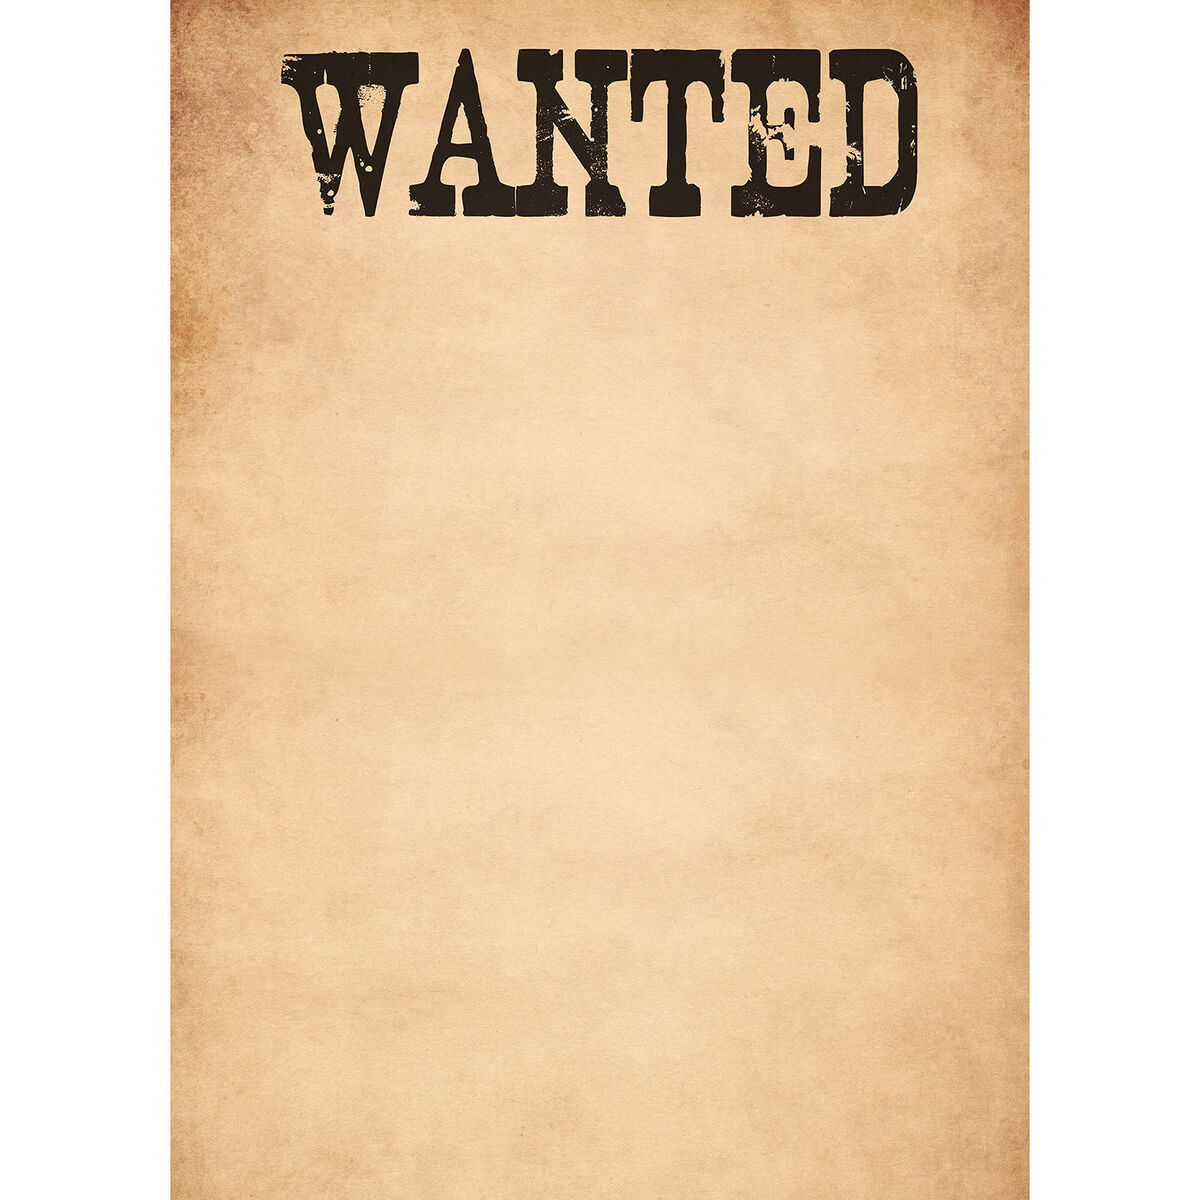 Wanted Poster | Smashtopia Wiki | Fandom